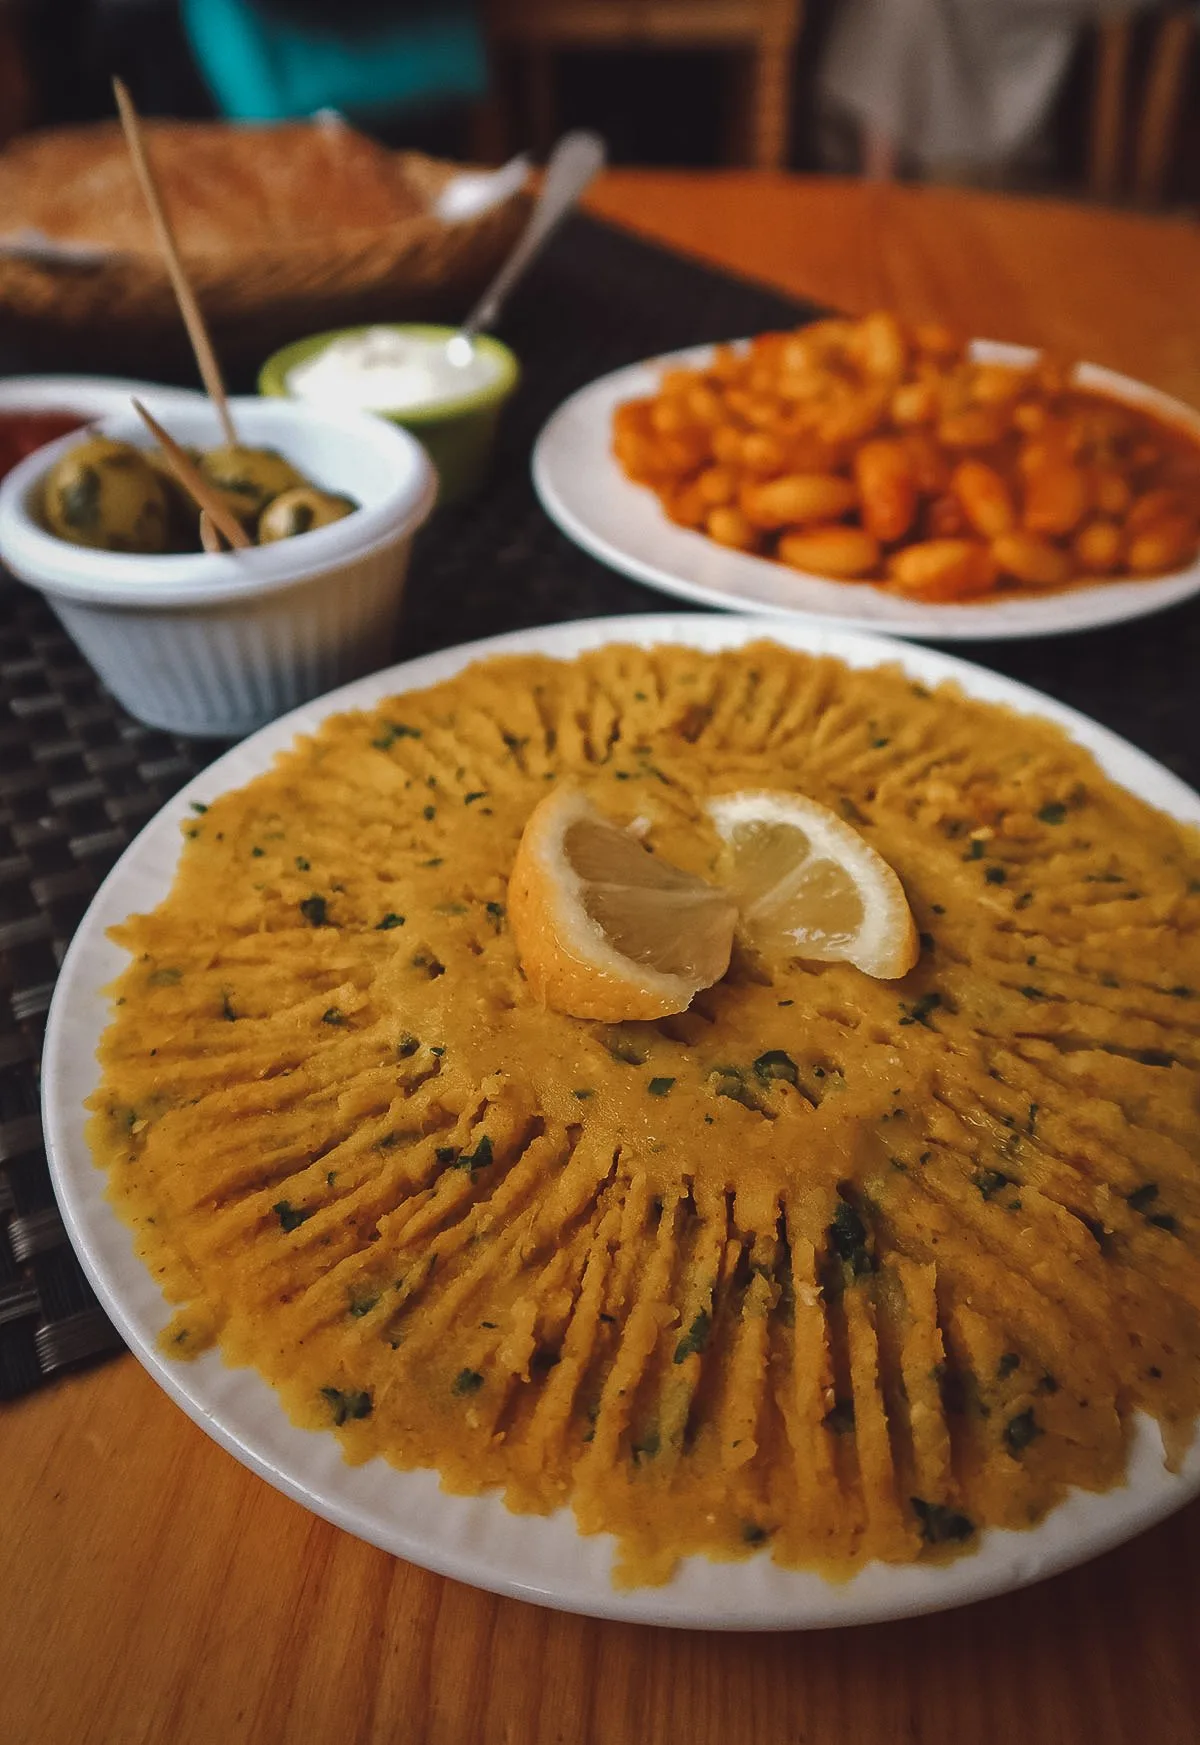 Hummus at a restaurant in Marrakech